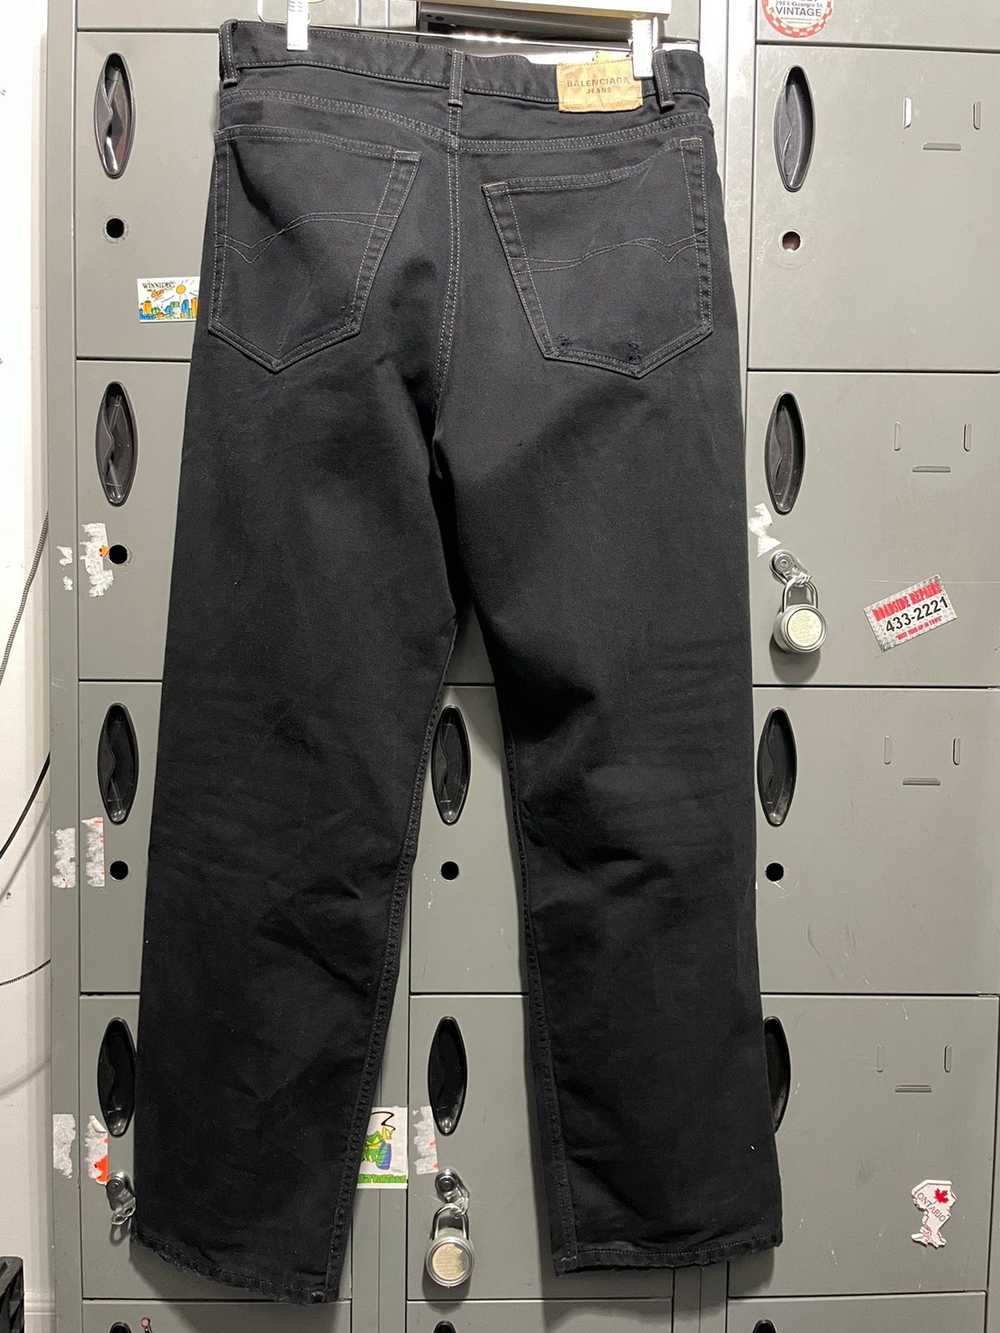 Balenciaga Balenciaga black jeans distressed faded - image 9